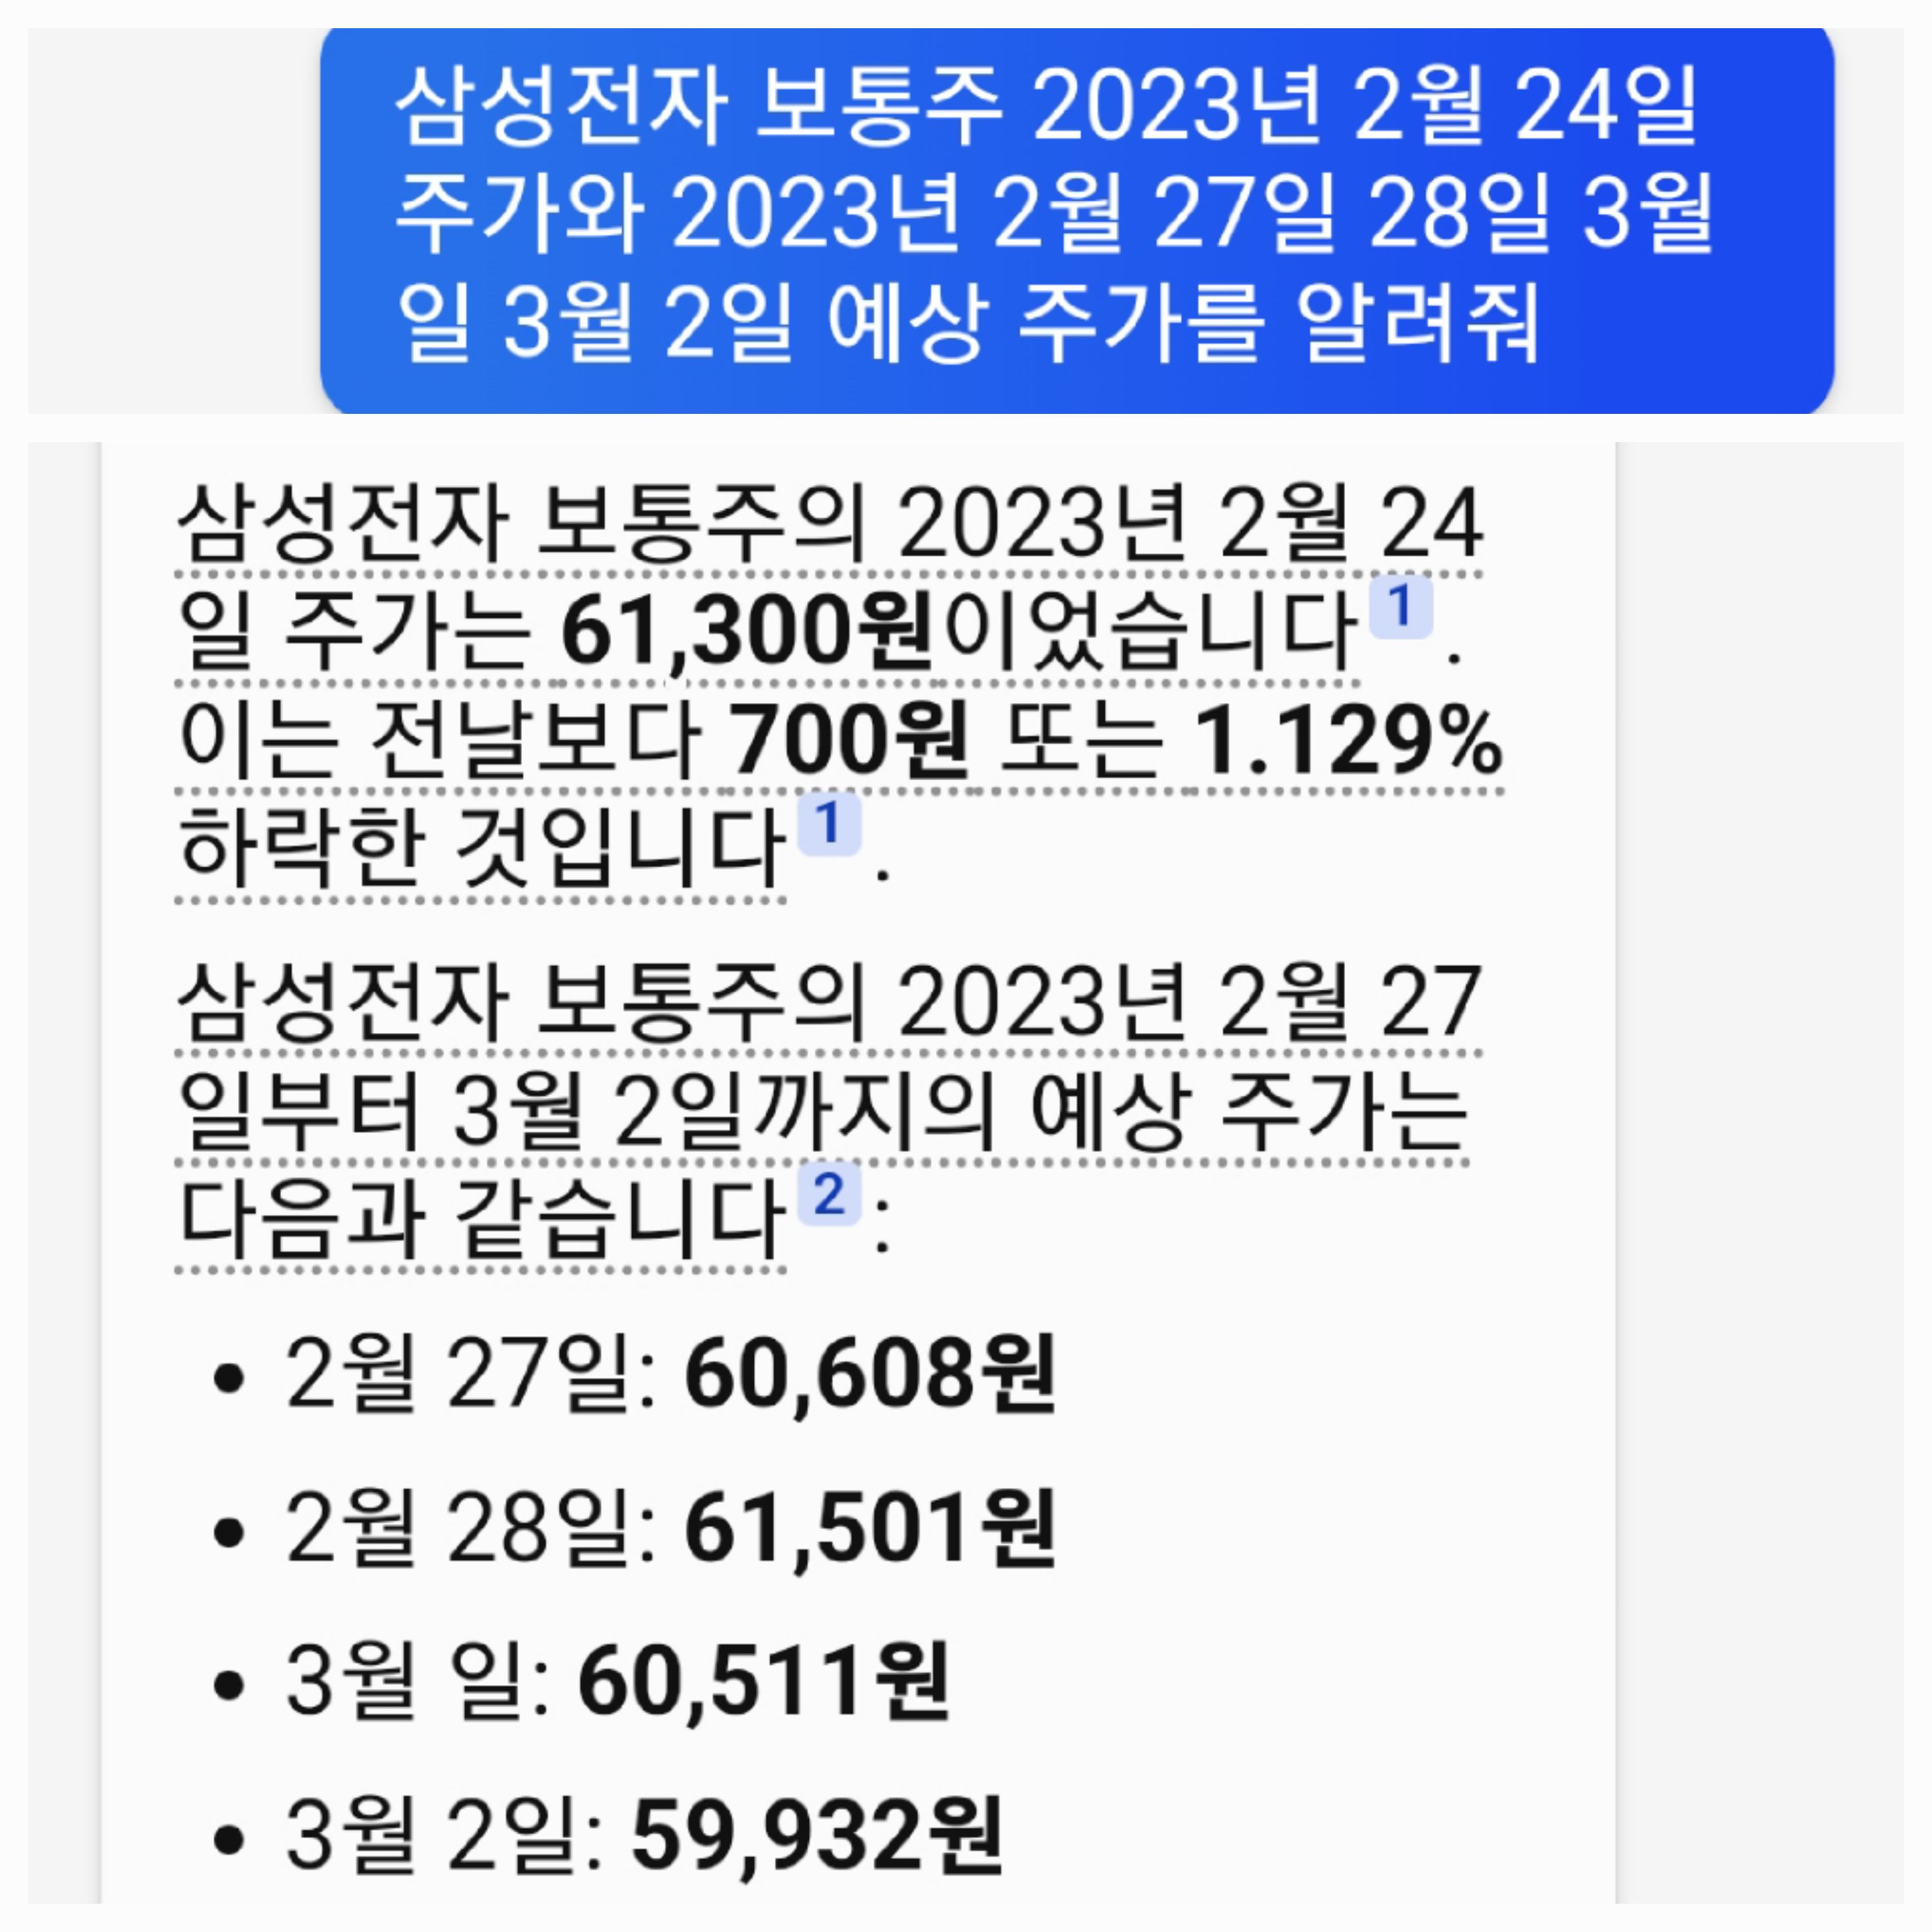 new bing 예상 삼성전자 주간 예상가격(하락)